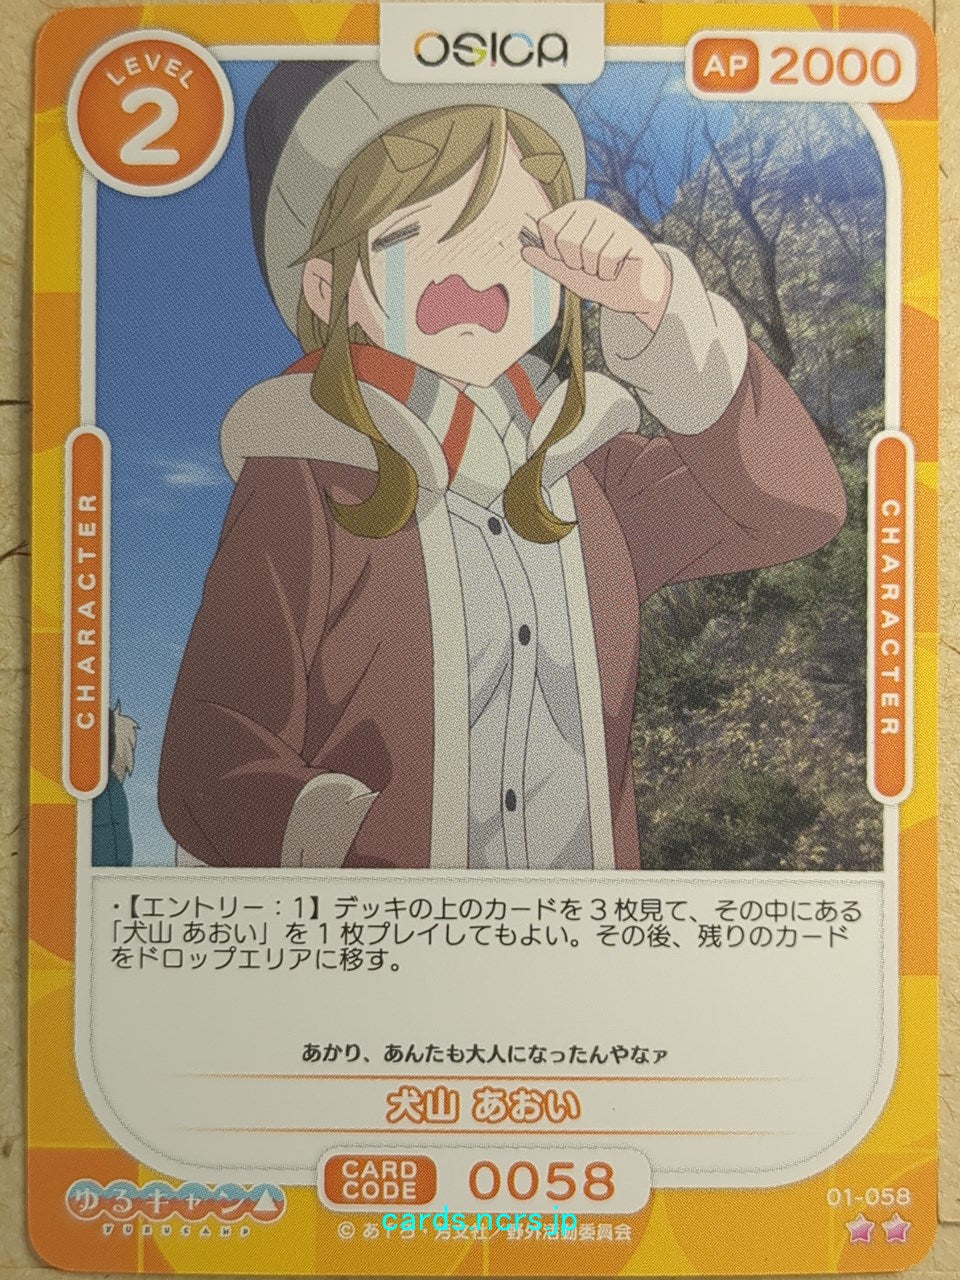 OSICA Laid-Back Camp -Aoi Inuyama-   Trading Card OS/YUC-01-058